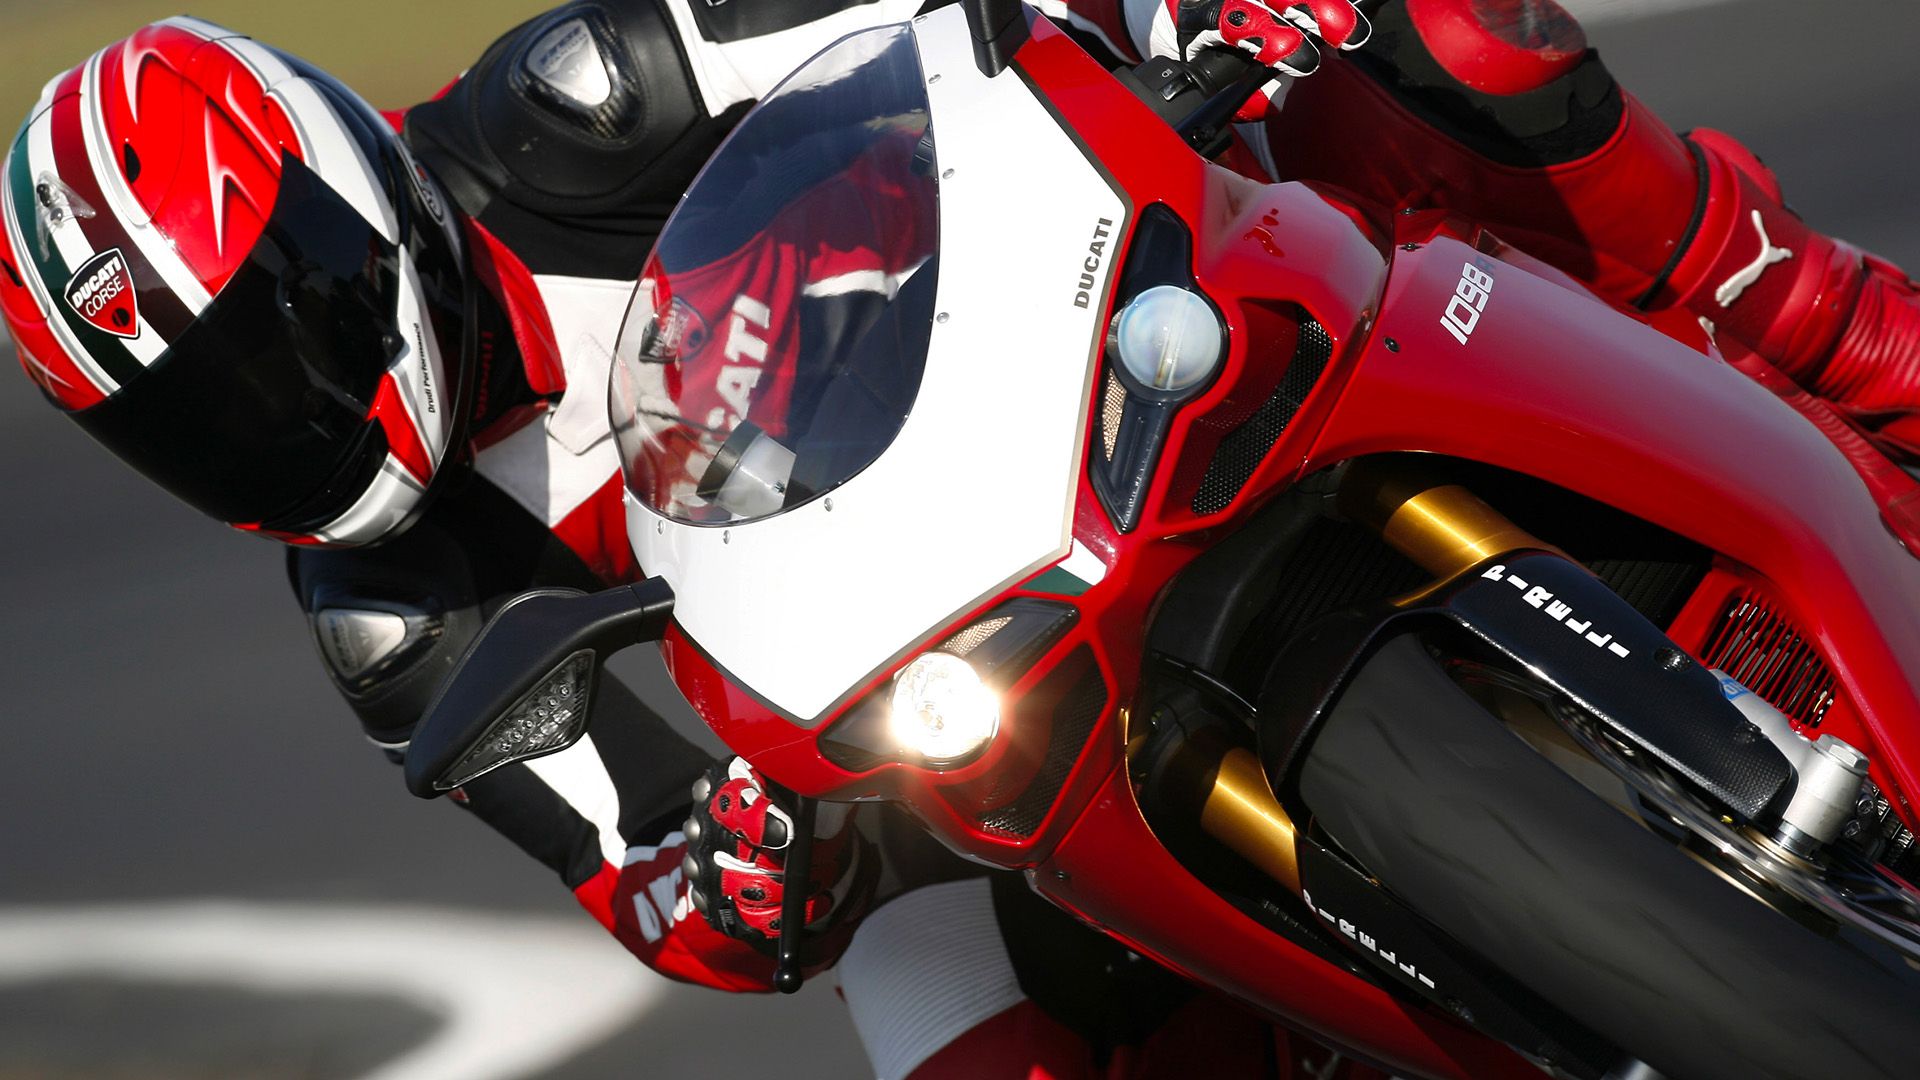 Ducati 1098 front action shot